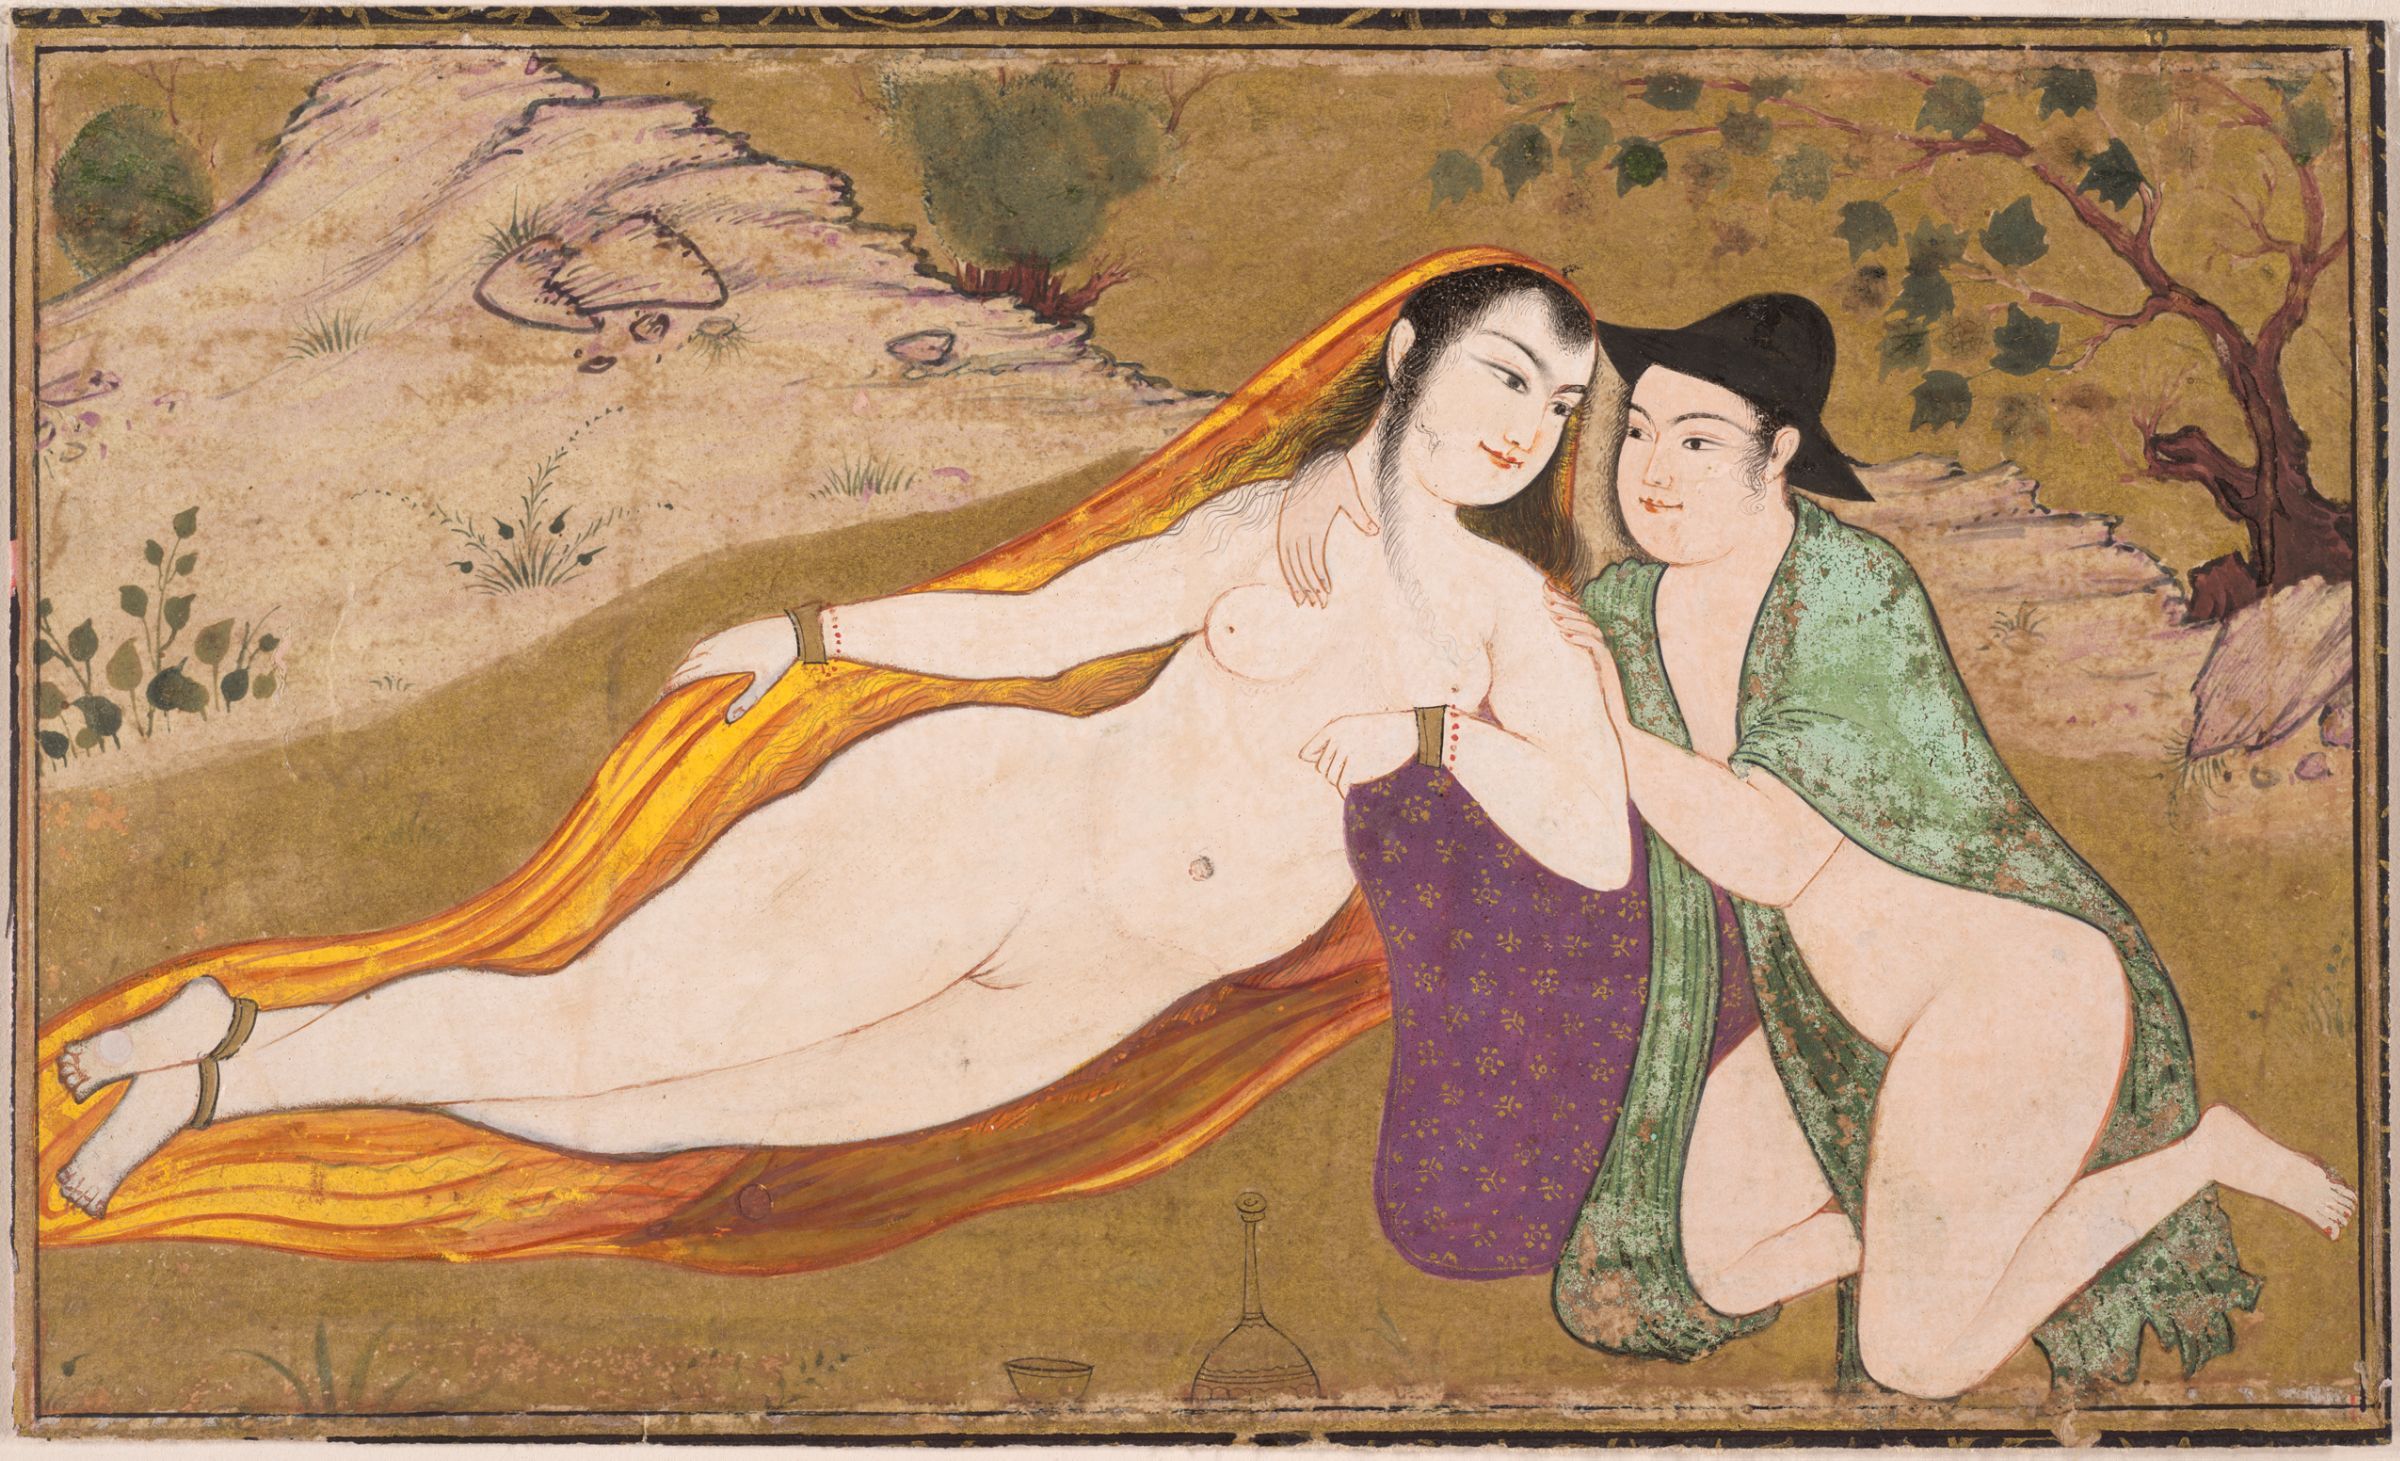 Paintings of naked people